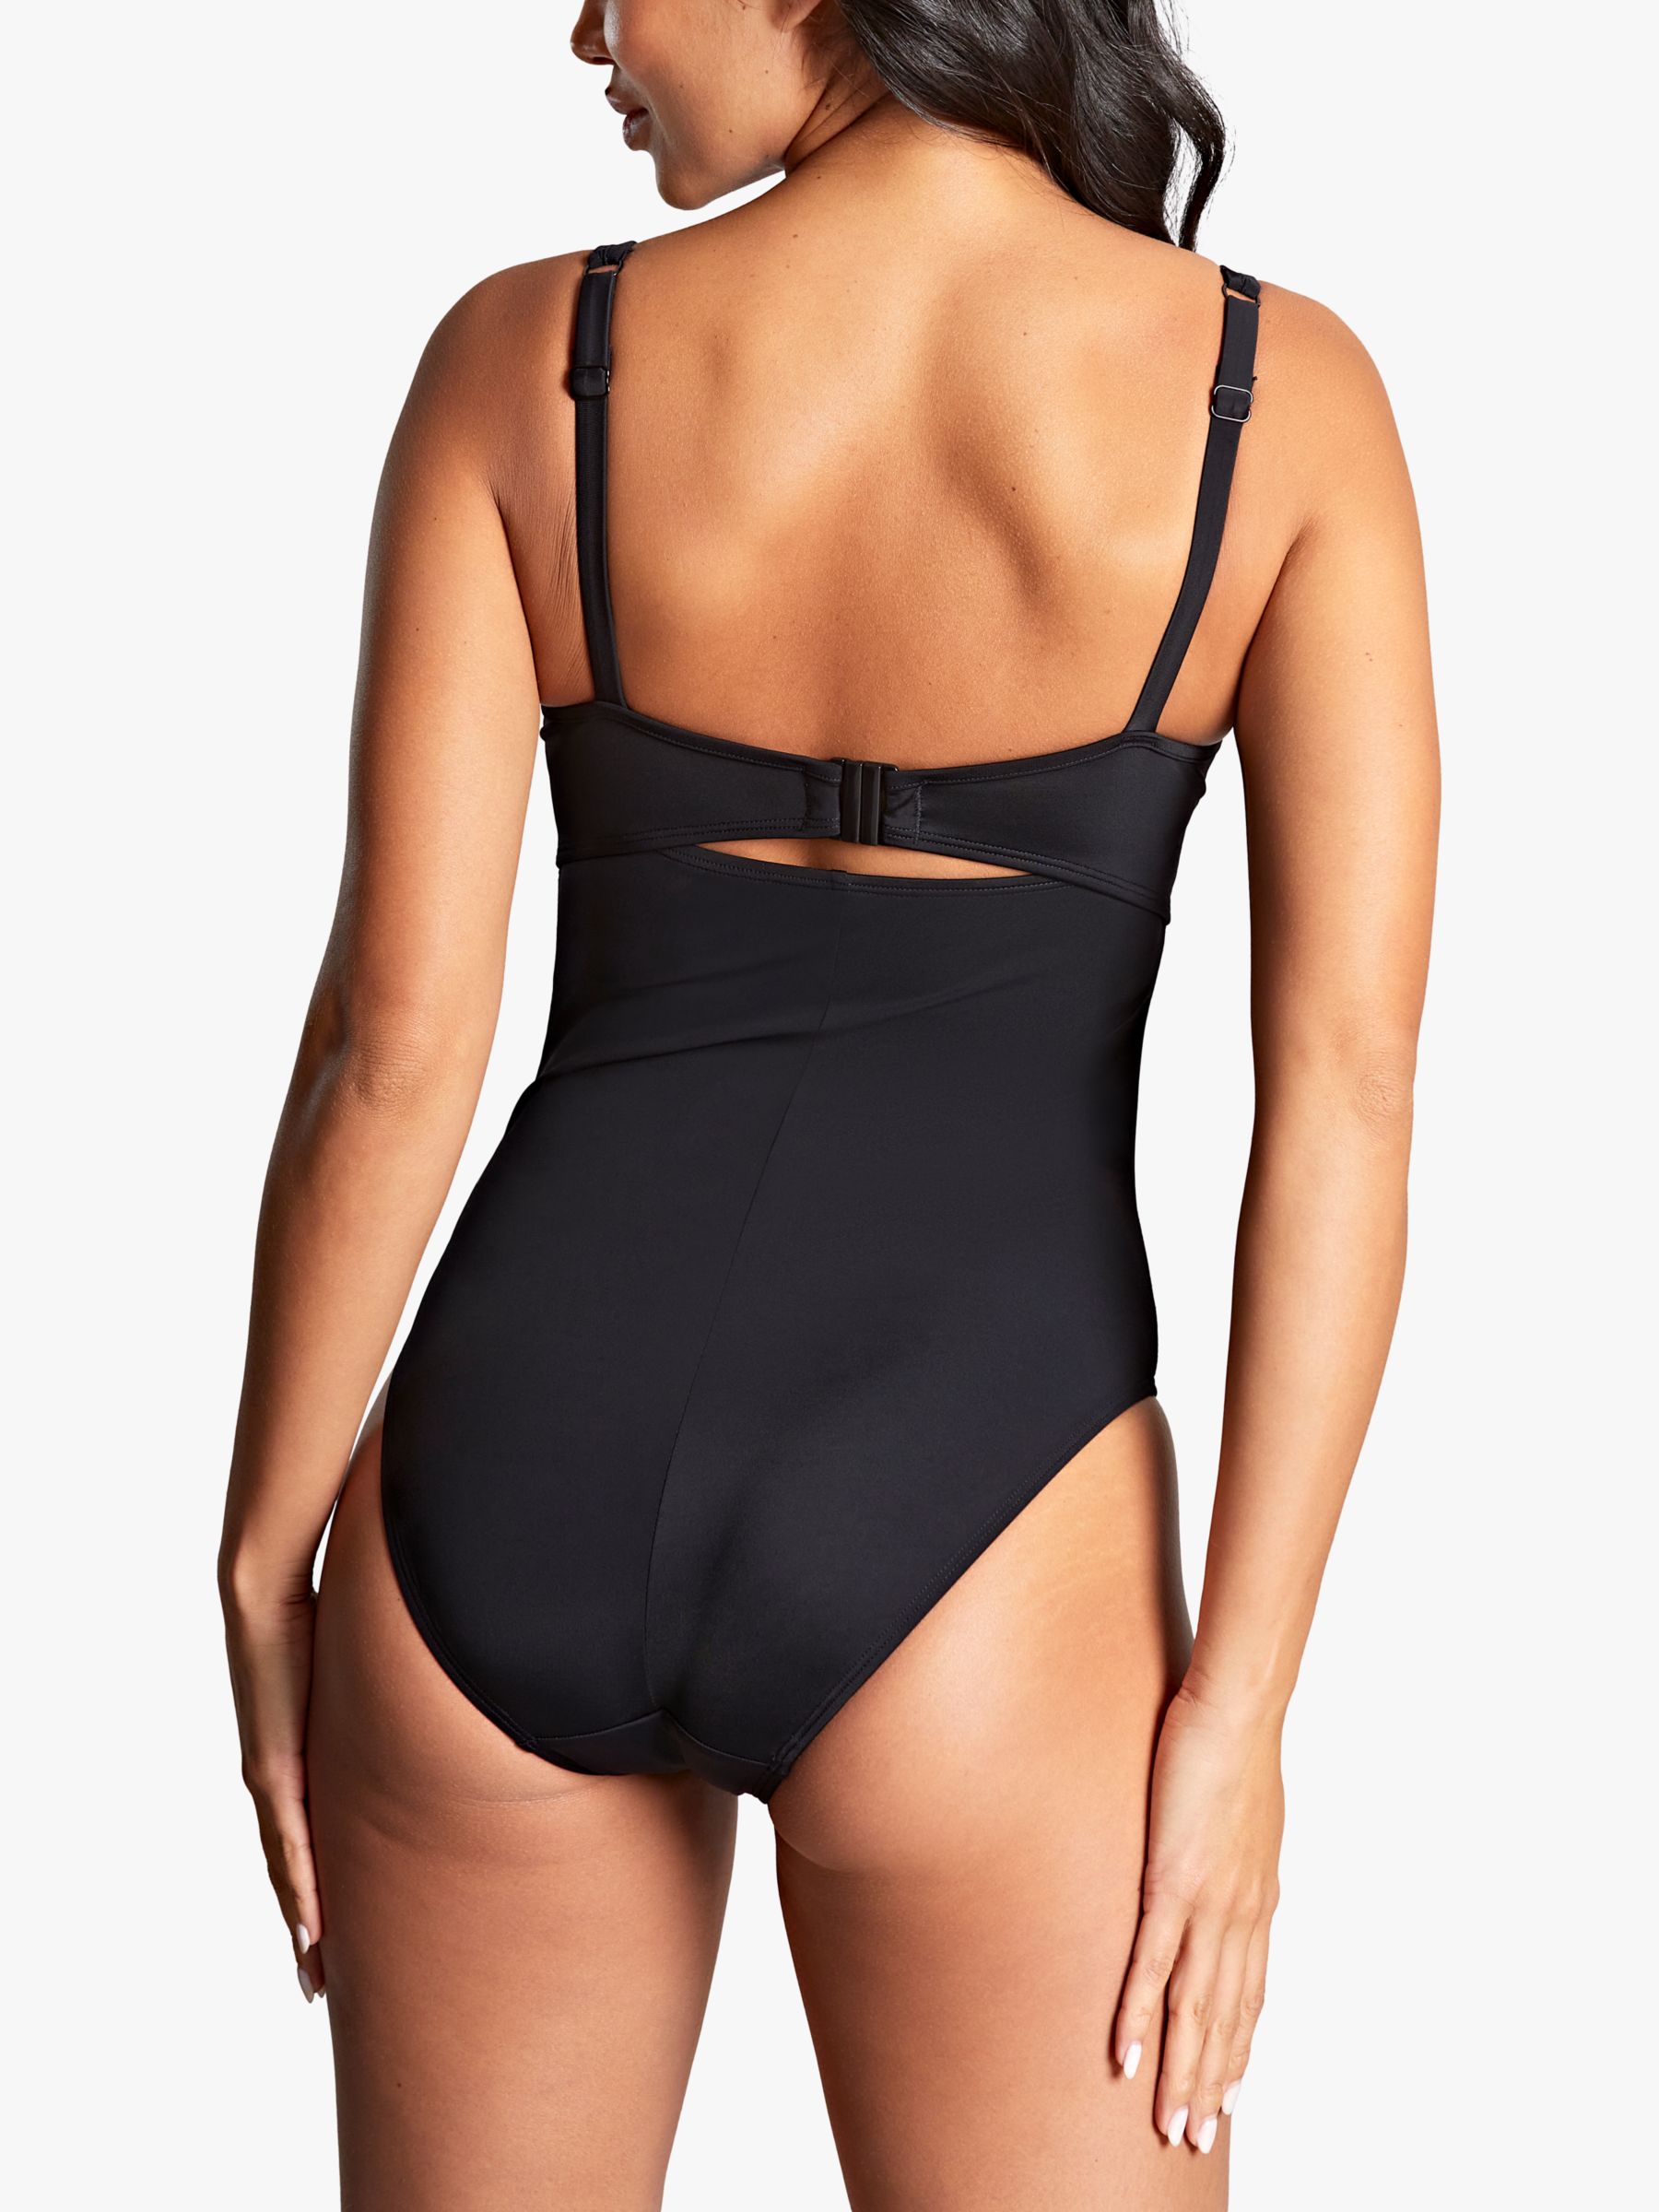 Panache Anya Riva Balconnet Swimsuit, Black, 30D